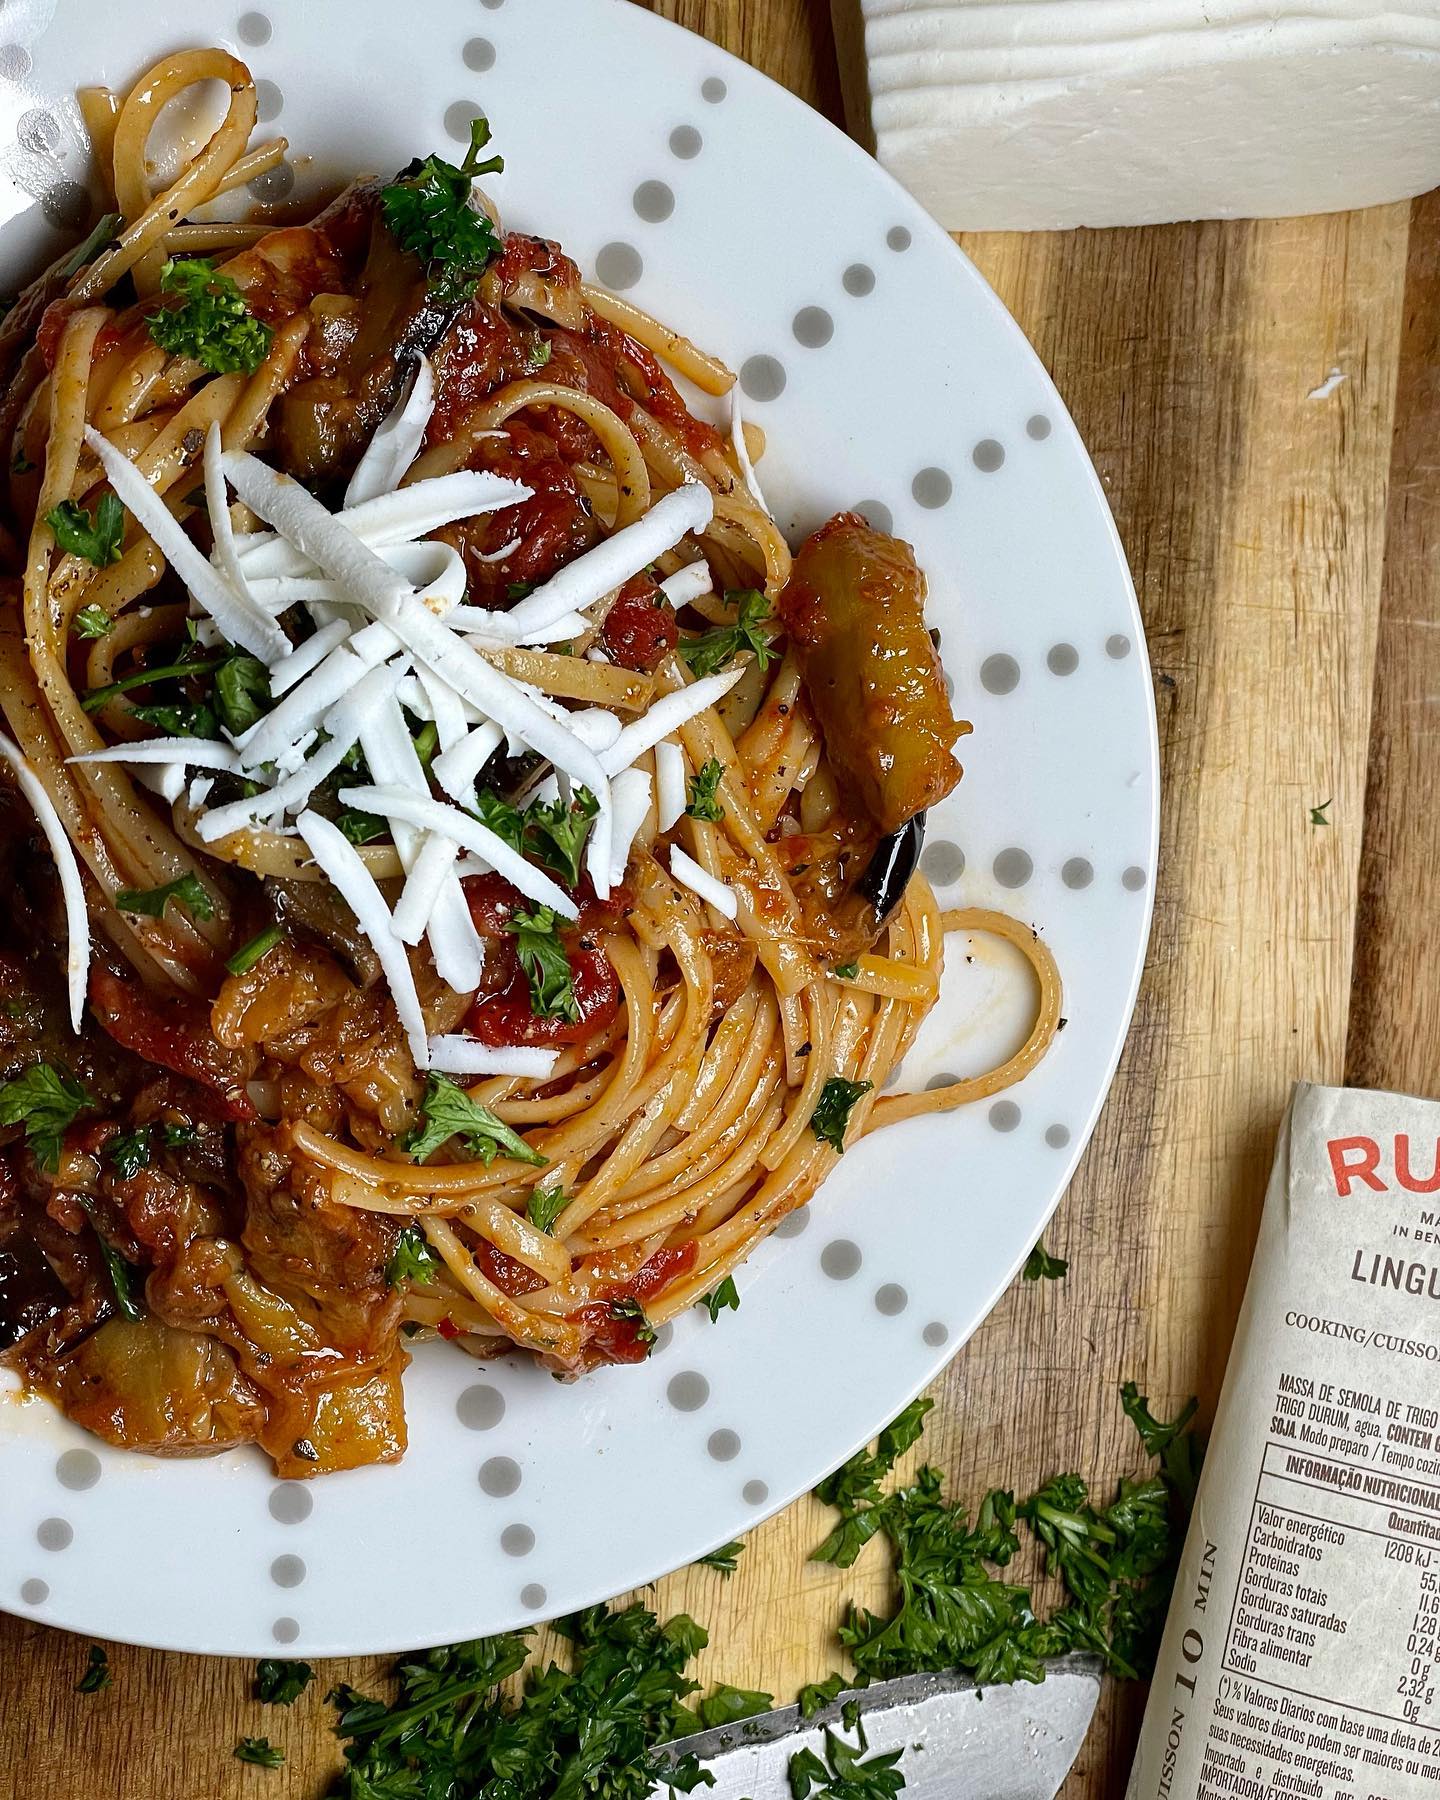 Pasta alla Norma a la Chrissy✌🏼
.
Sautéed eggplant tossed in a rich tomato sauce with lots of ricotta and fresh basil. Simple. Easy. Delicious👏🏼
.
Get the recipe on the blog now👇🏼

https://chrissymeetsworld.com/pasta-alla-norma-recipe/
.
.
#chrissycooks #pasta #pastaallanorma #spaghetti #eggplant #aubergine #vegetarianrecipes #vegetarianfood #recipe #foodblog #onmytable #sicilianfood #tomatopasta #foodspotting #buzzfeast #buzzfeedfood #todayfood #bhgfood #cheese #pastamakesmehappy #melanzane #italianfood #yummly #saveurmag #instapasta #instagood #foodilysm